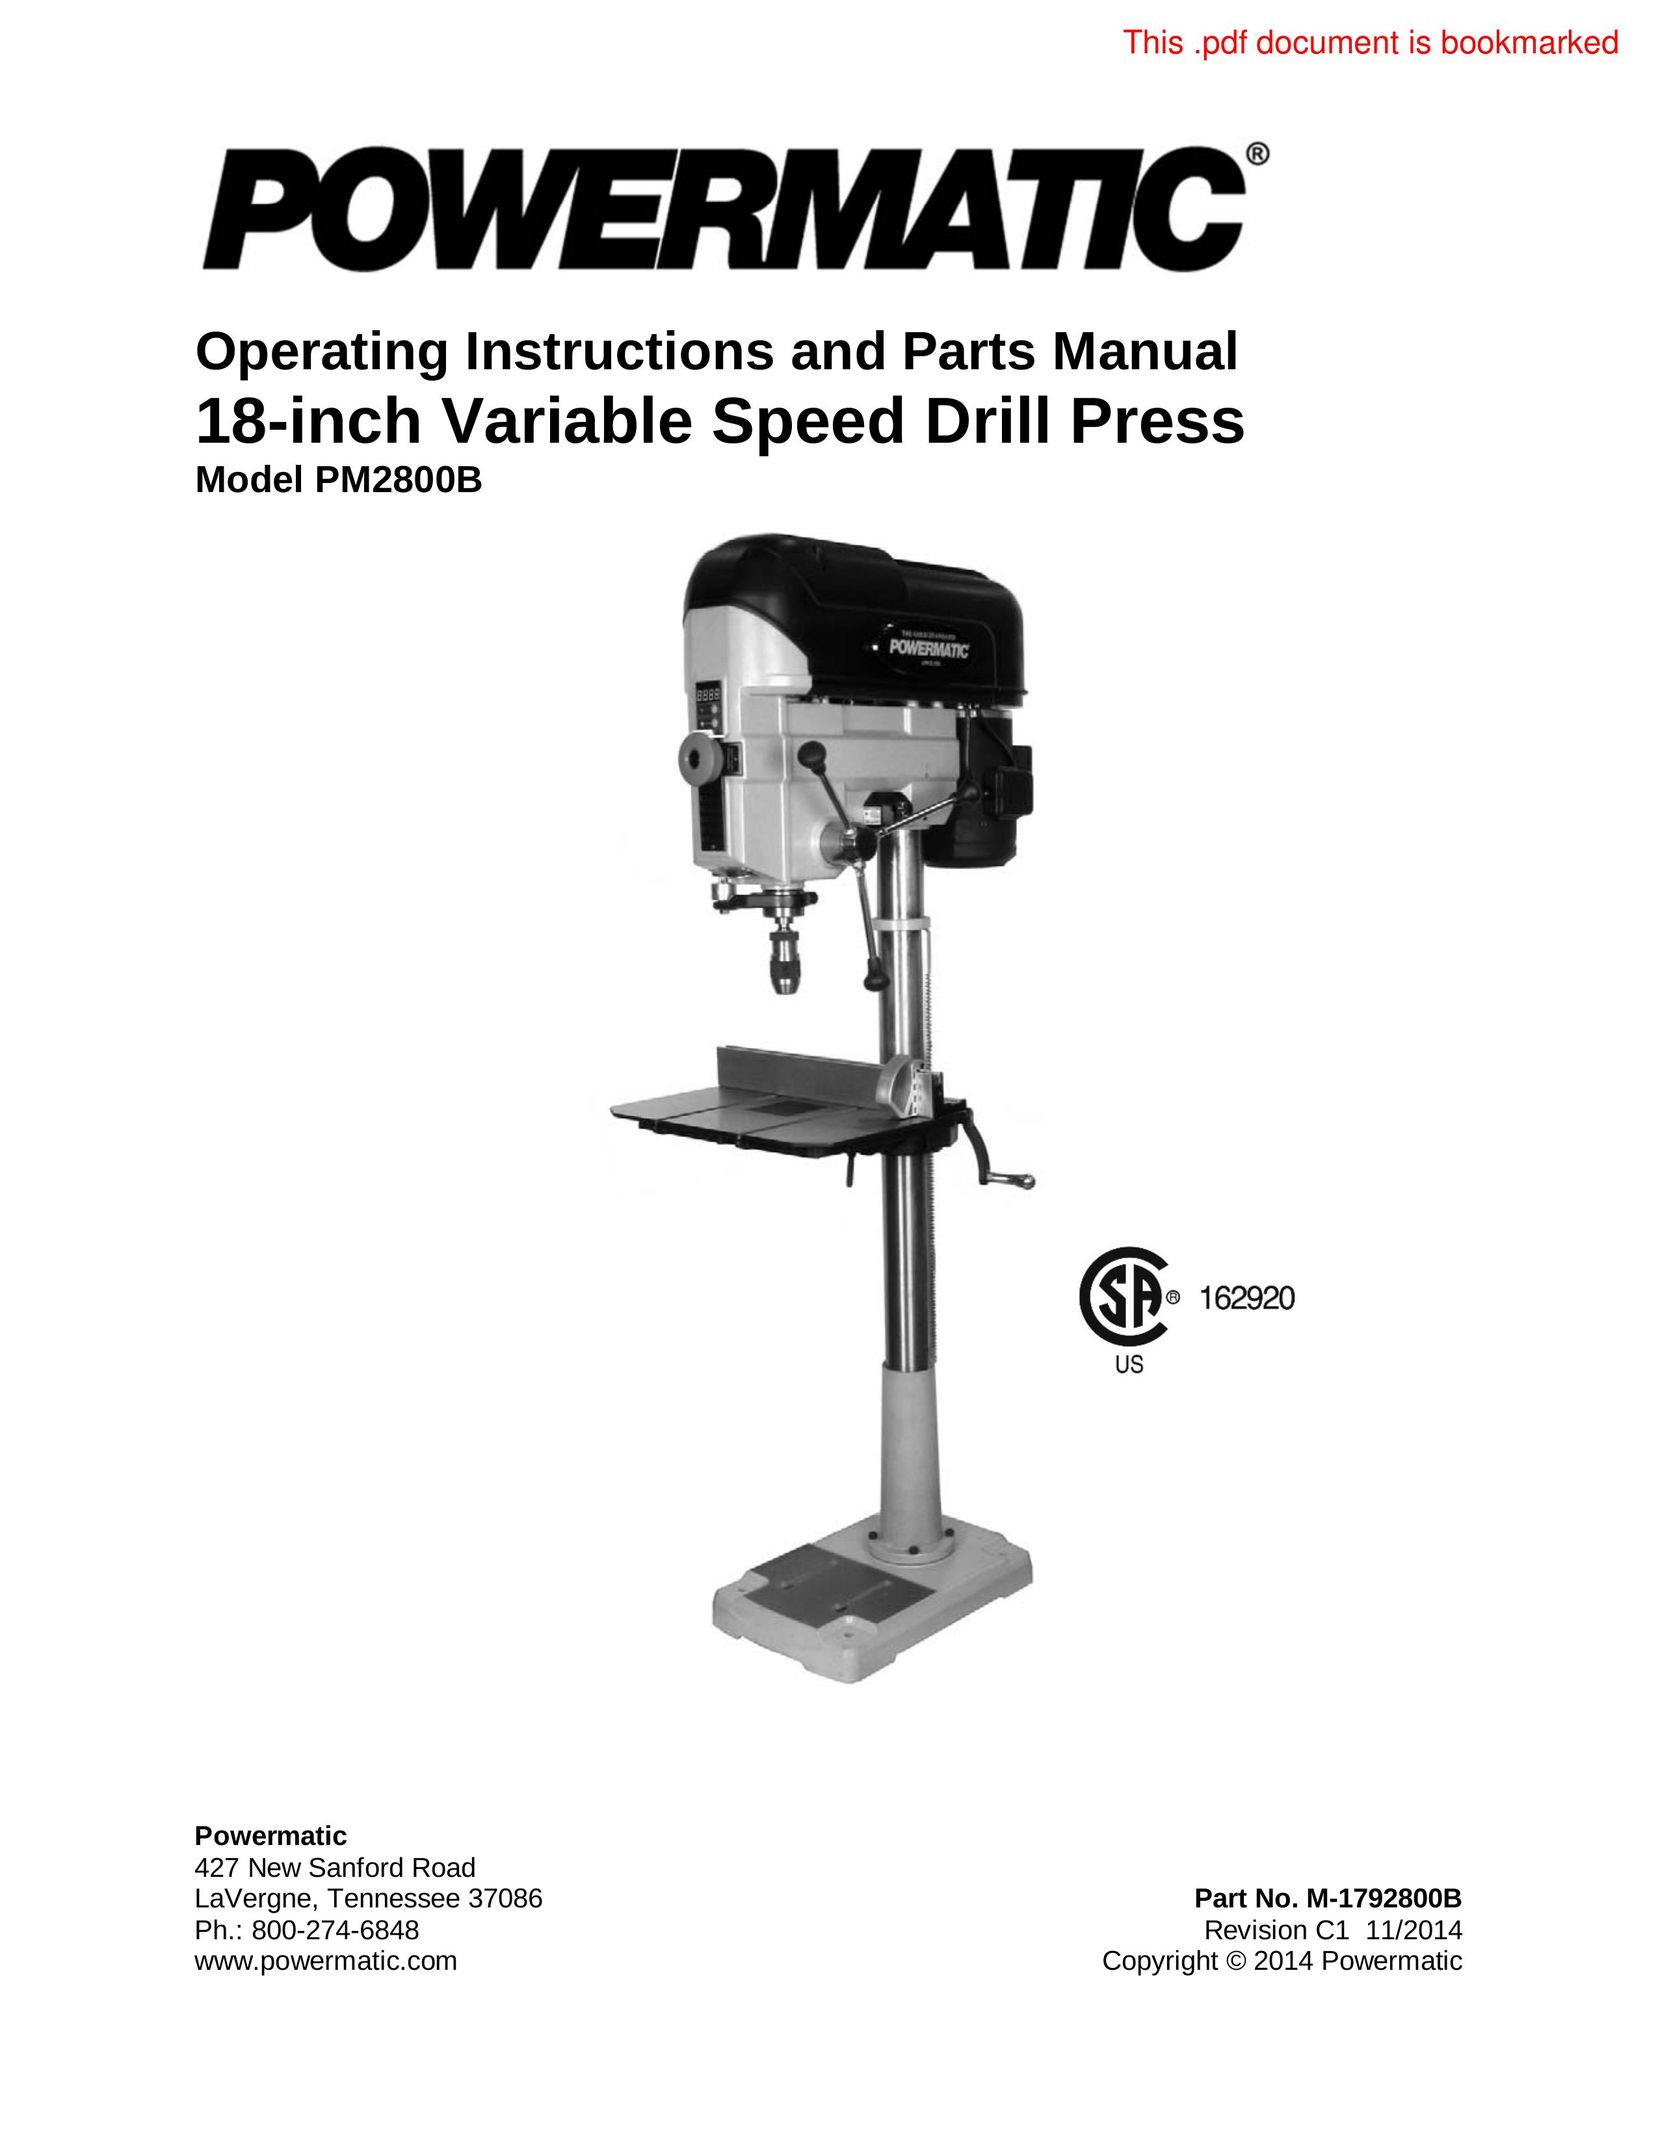 Powermatic PM2800B Cordless Drill User Manual